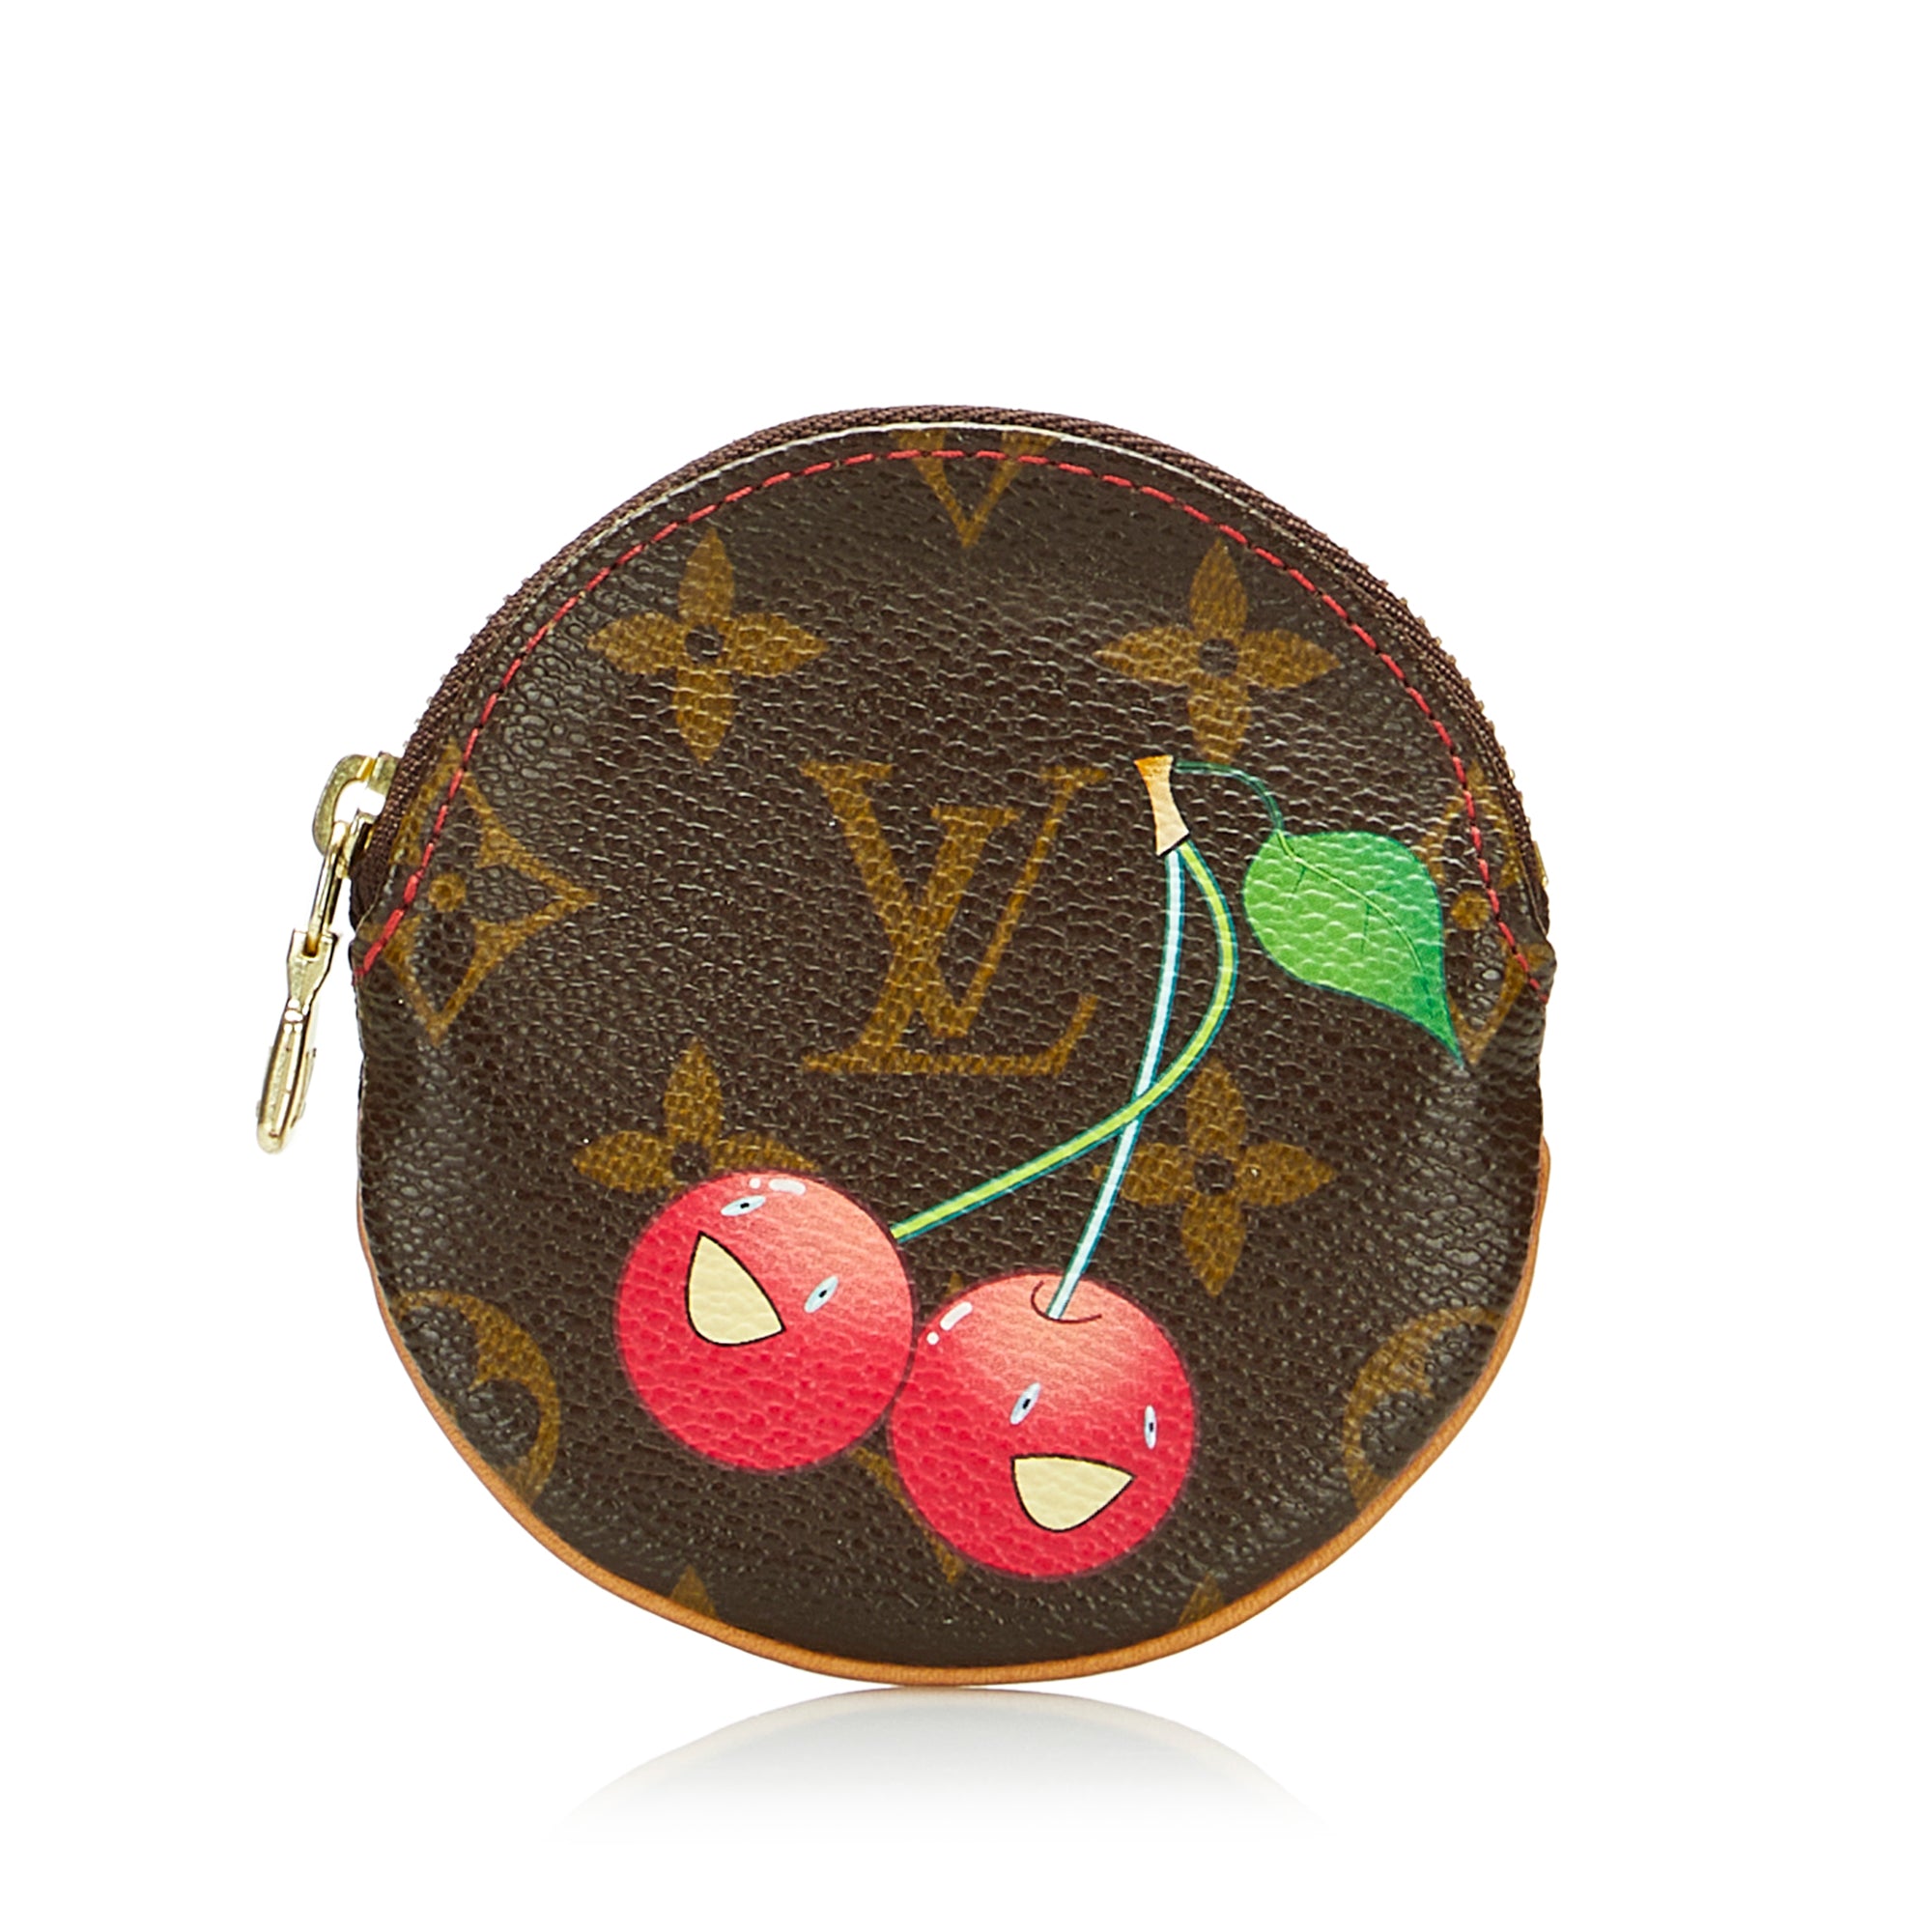 Louis Vuitton, Bags, Louis Vuitton Cerises Cherry Bucket Bag With Pouch  Included